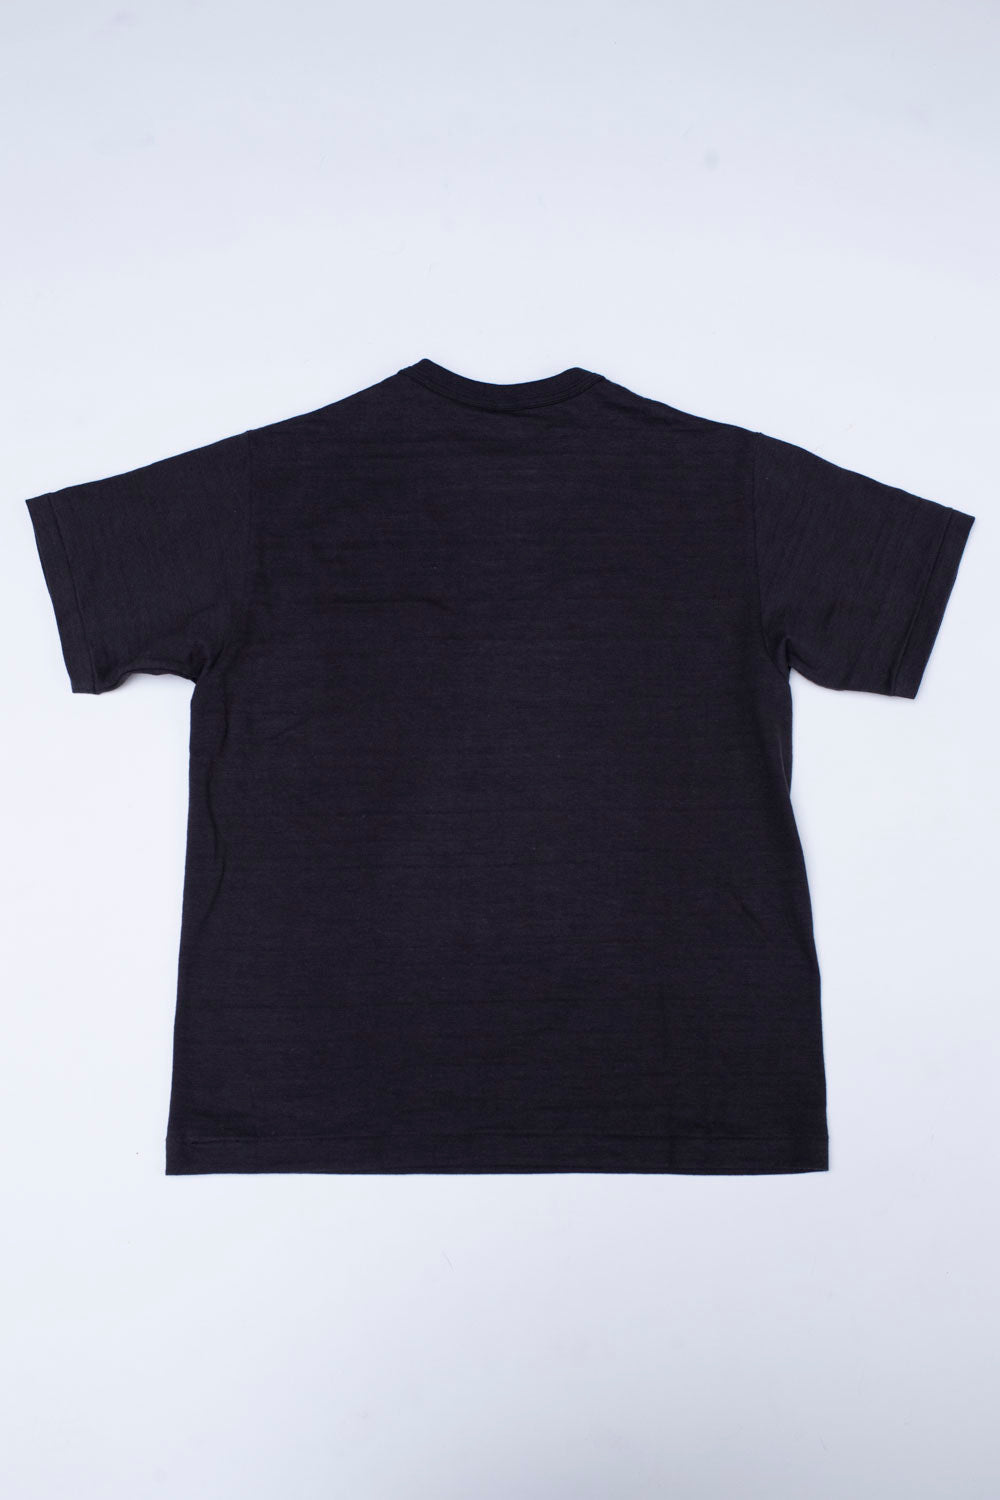 Lot 4601P - Slubby Cotton Pocket T-Shirt - Sumikuro